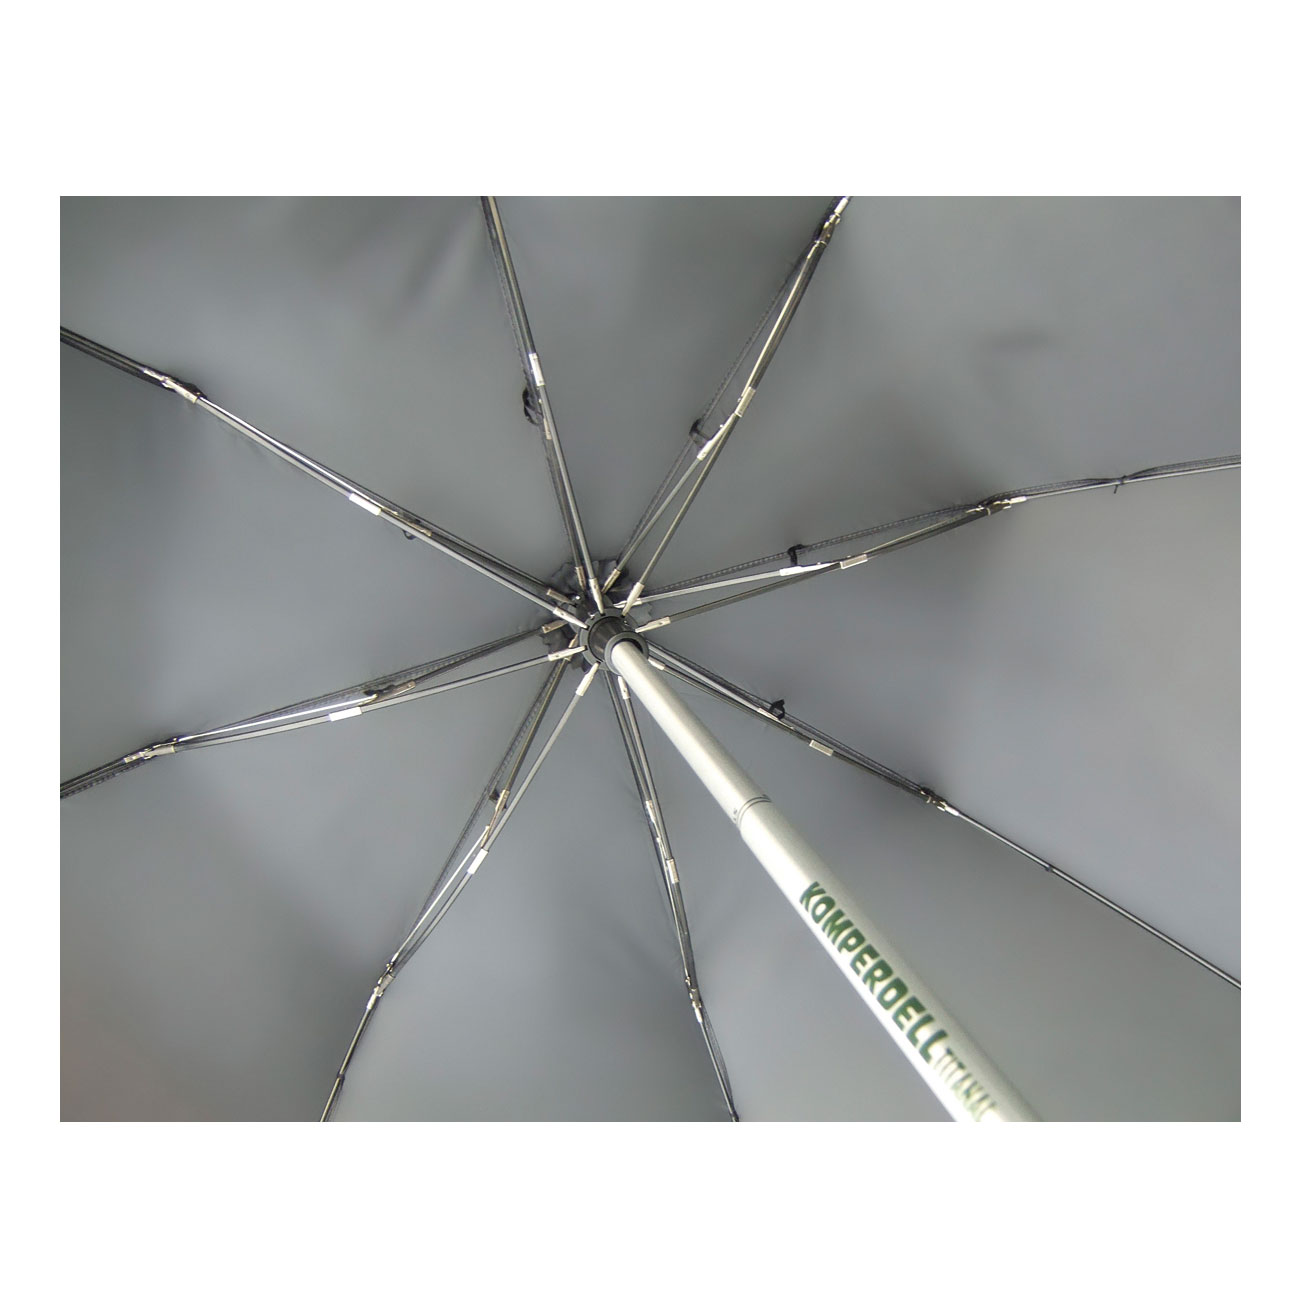 Euroschrim Komperdell Trekkingstock / Regenschirm schwarz Bild 1